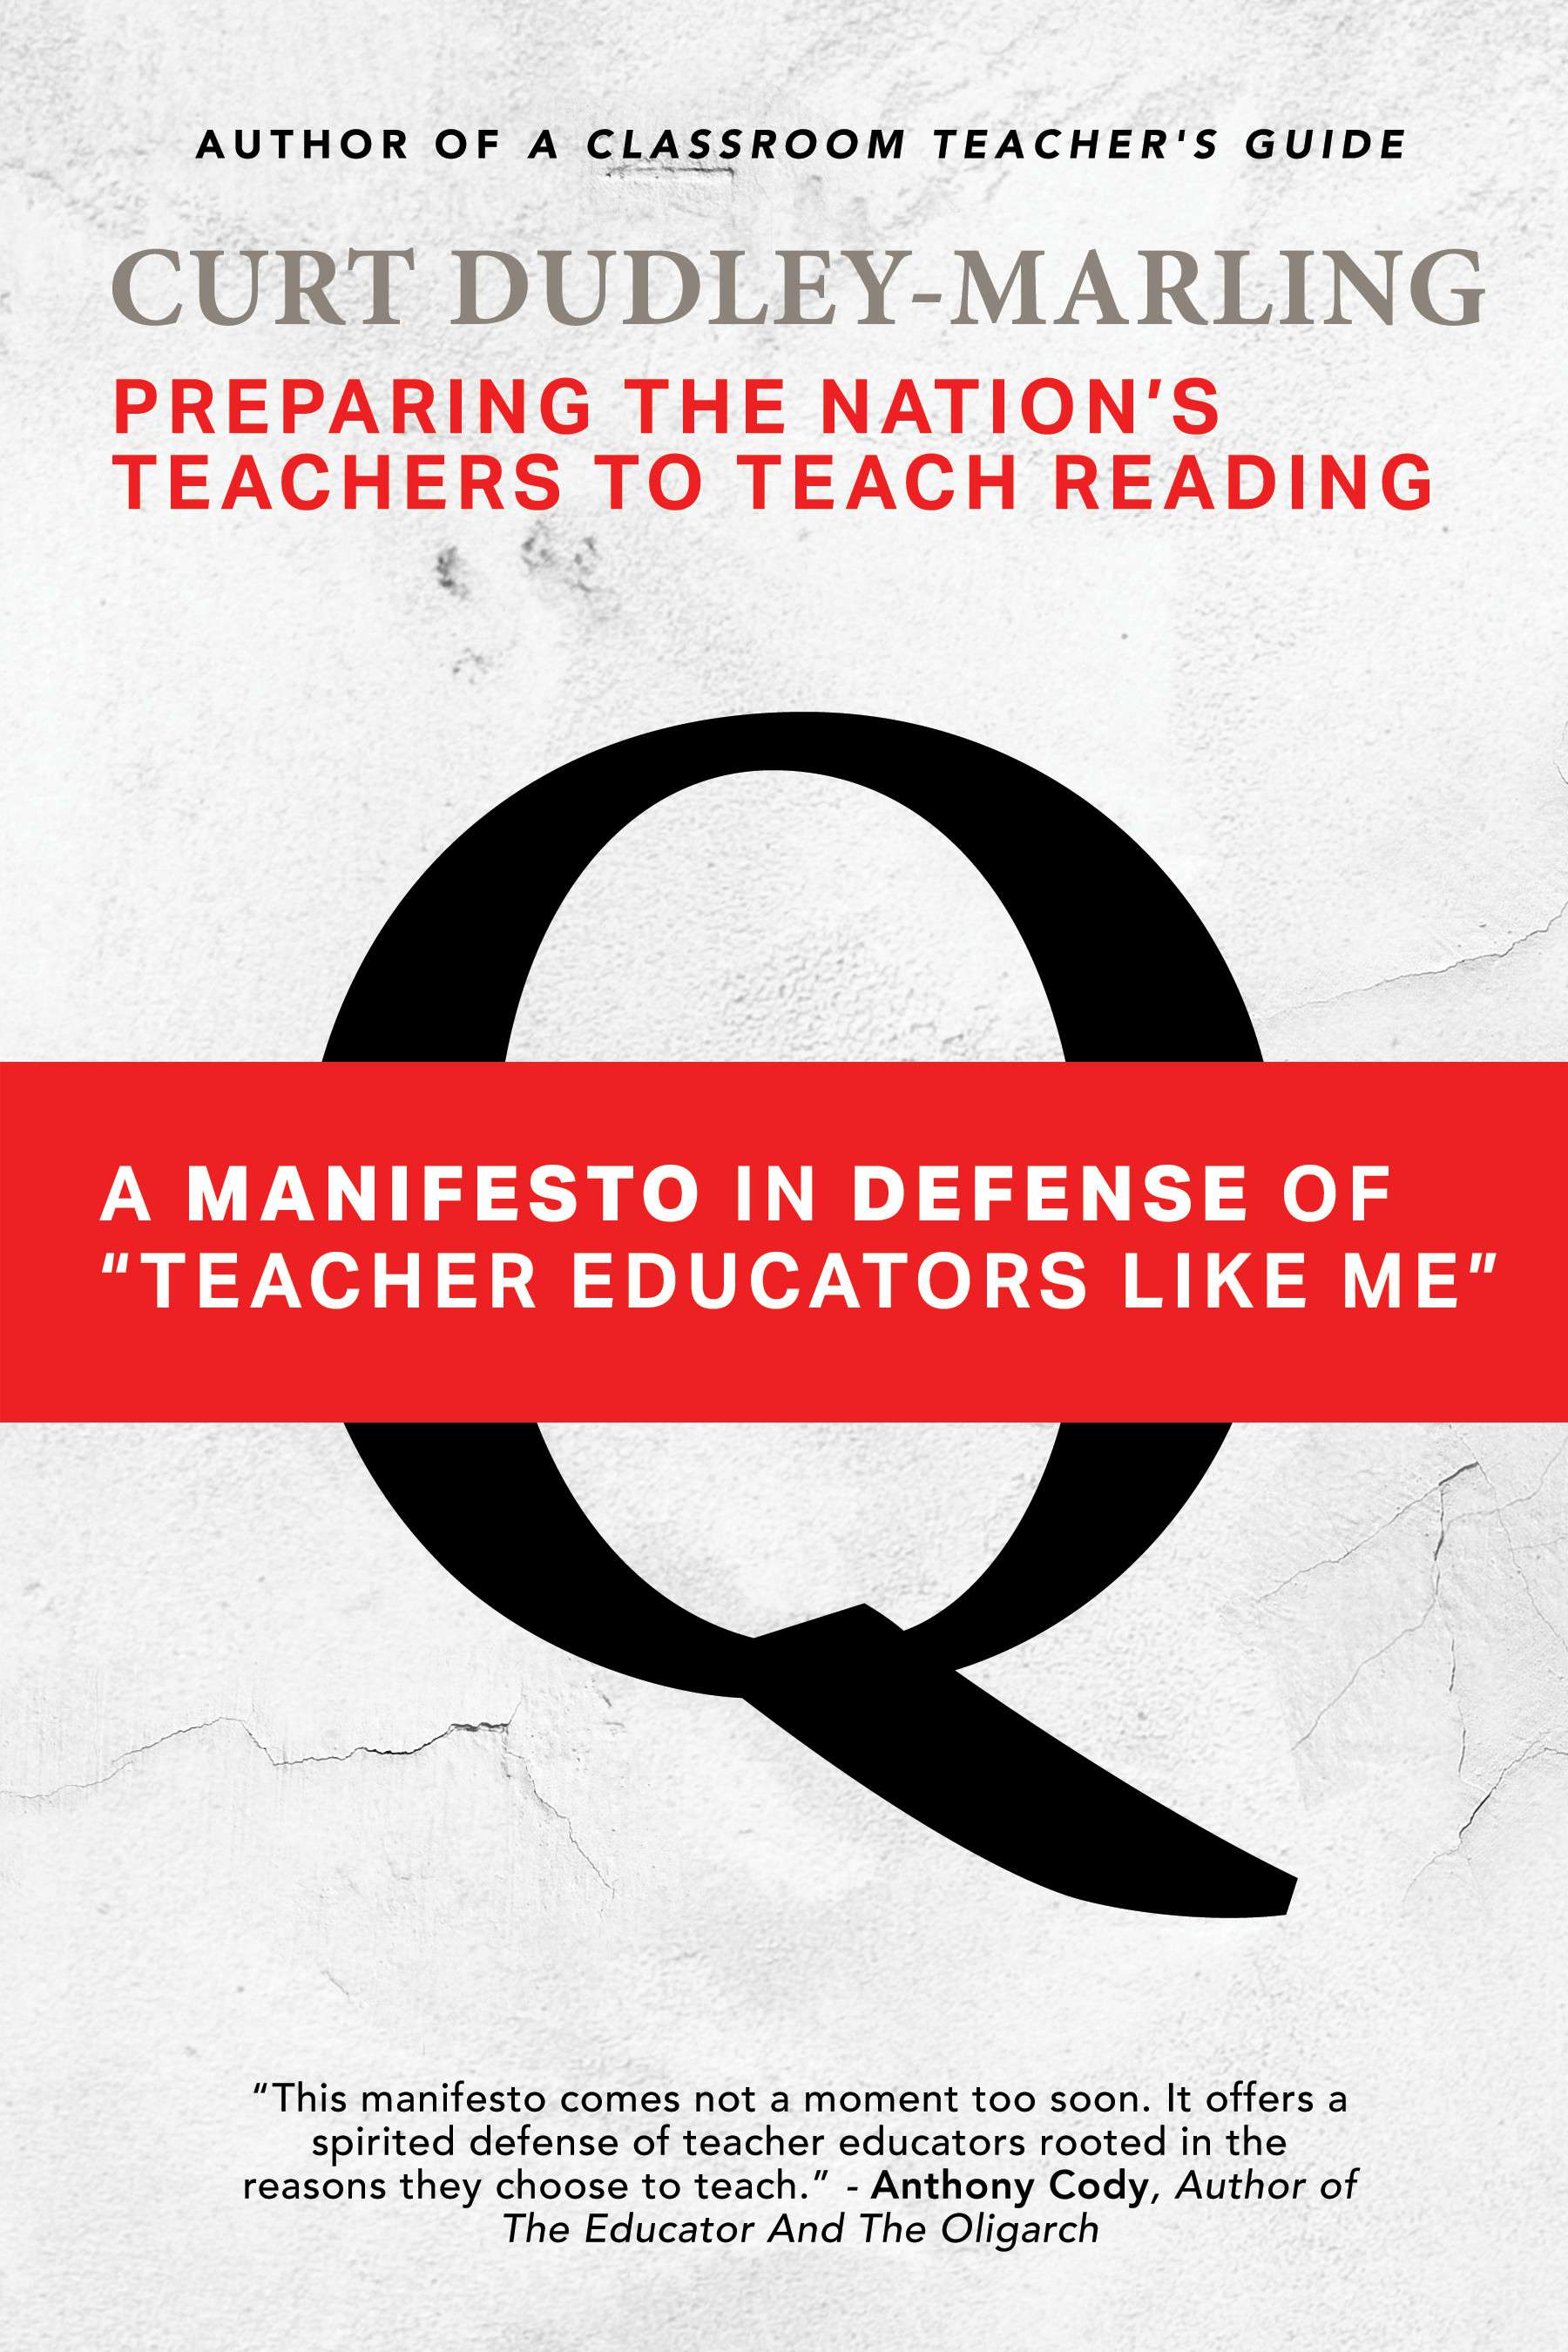 Preparing the Nation's Teachers to Teach Reading: A Manifesto in Defense of "Teacher Educators Like Me"